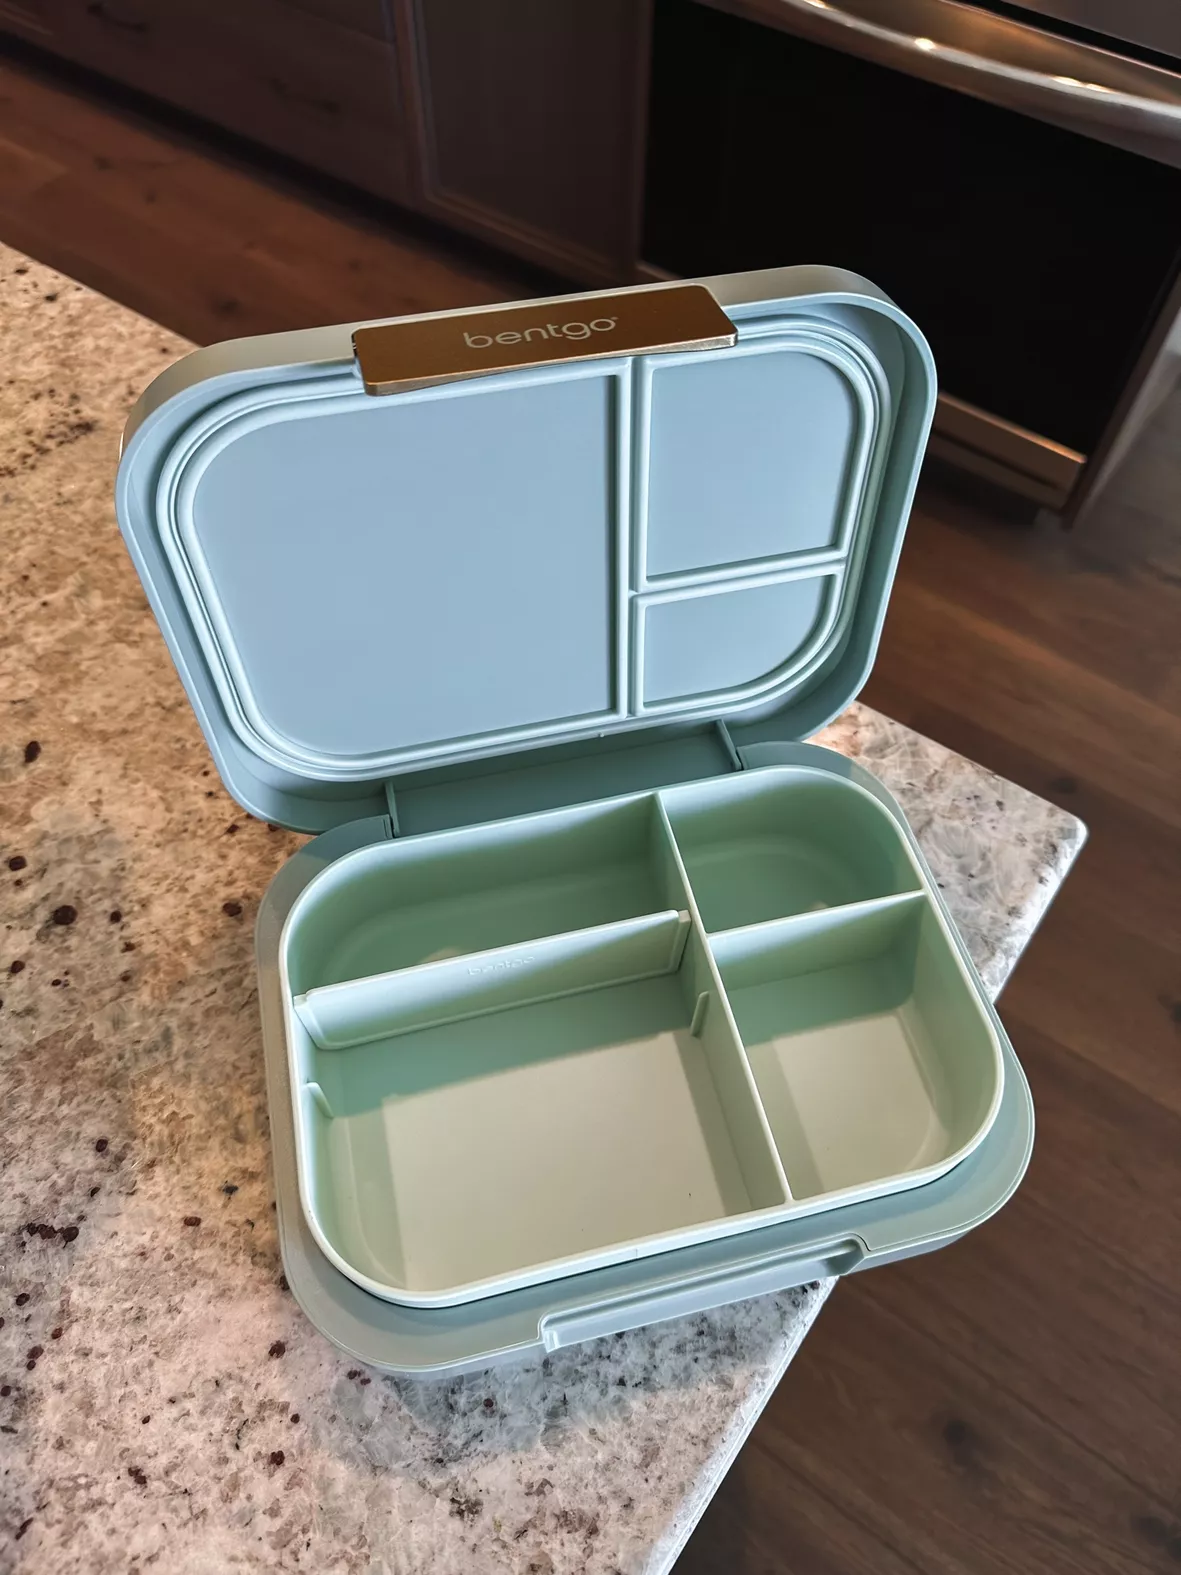 Bentgo Modern Leak-Resistant Lunch Box